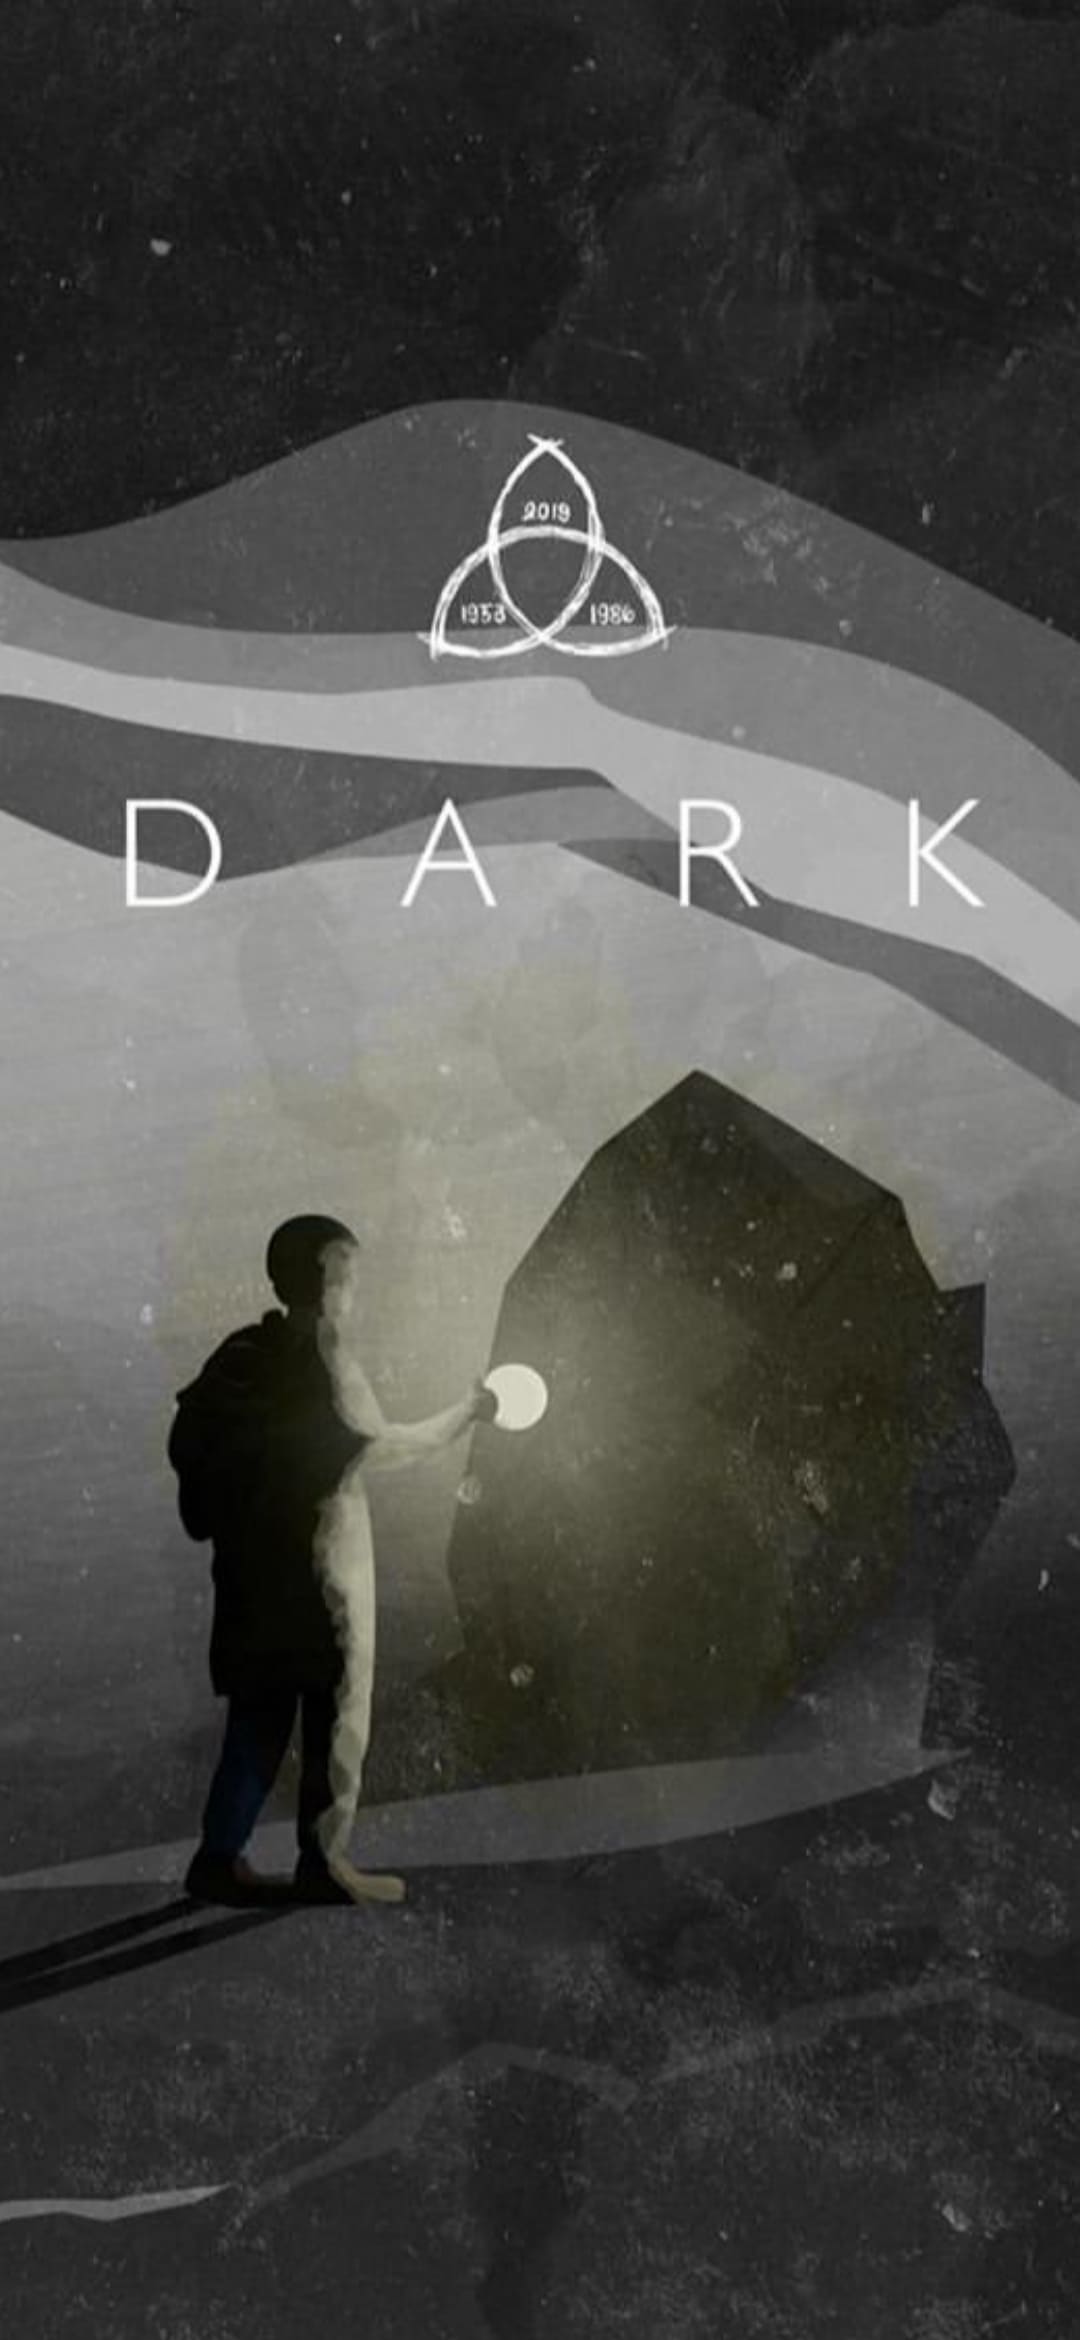 Dark Season 3 Wallpaper Download High Quality New 4K HD Image